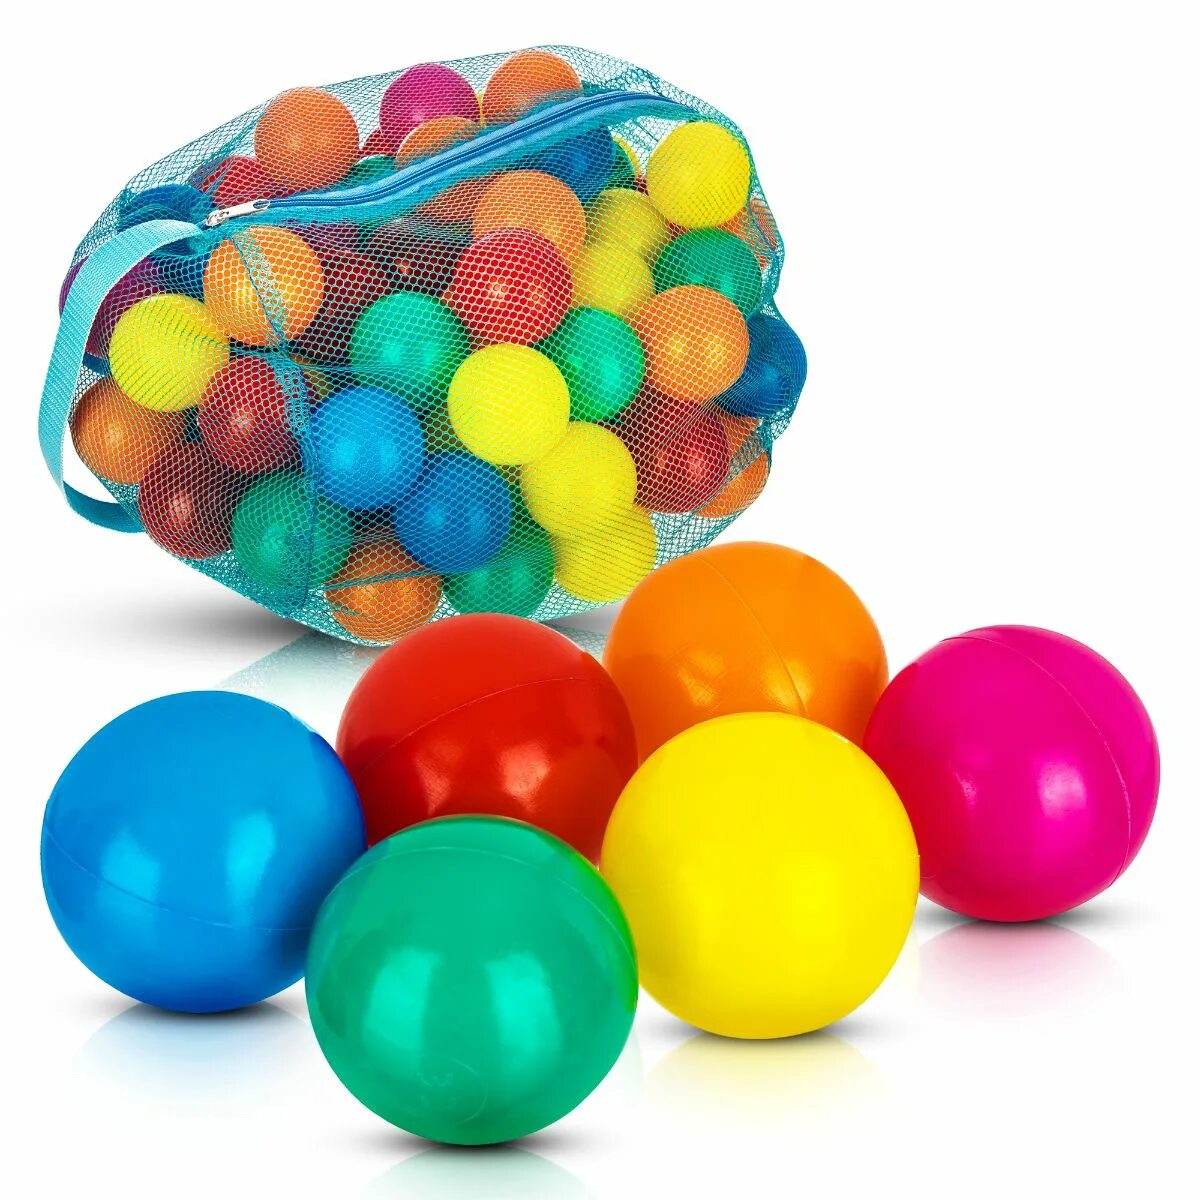 Ball Pit balls. Цветное ассорти шаров на 3 года. Plastic balls. Soft Foam balls for Kid Pool.